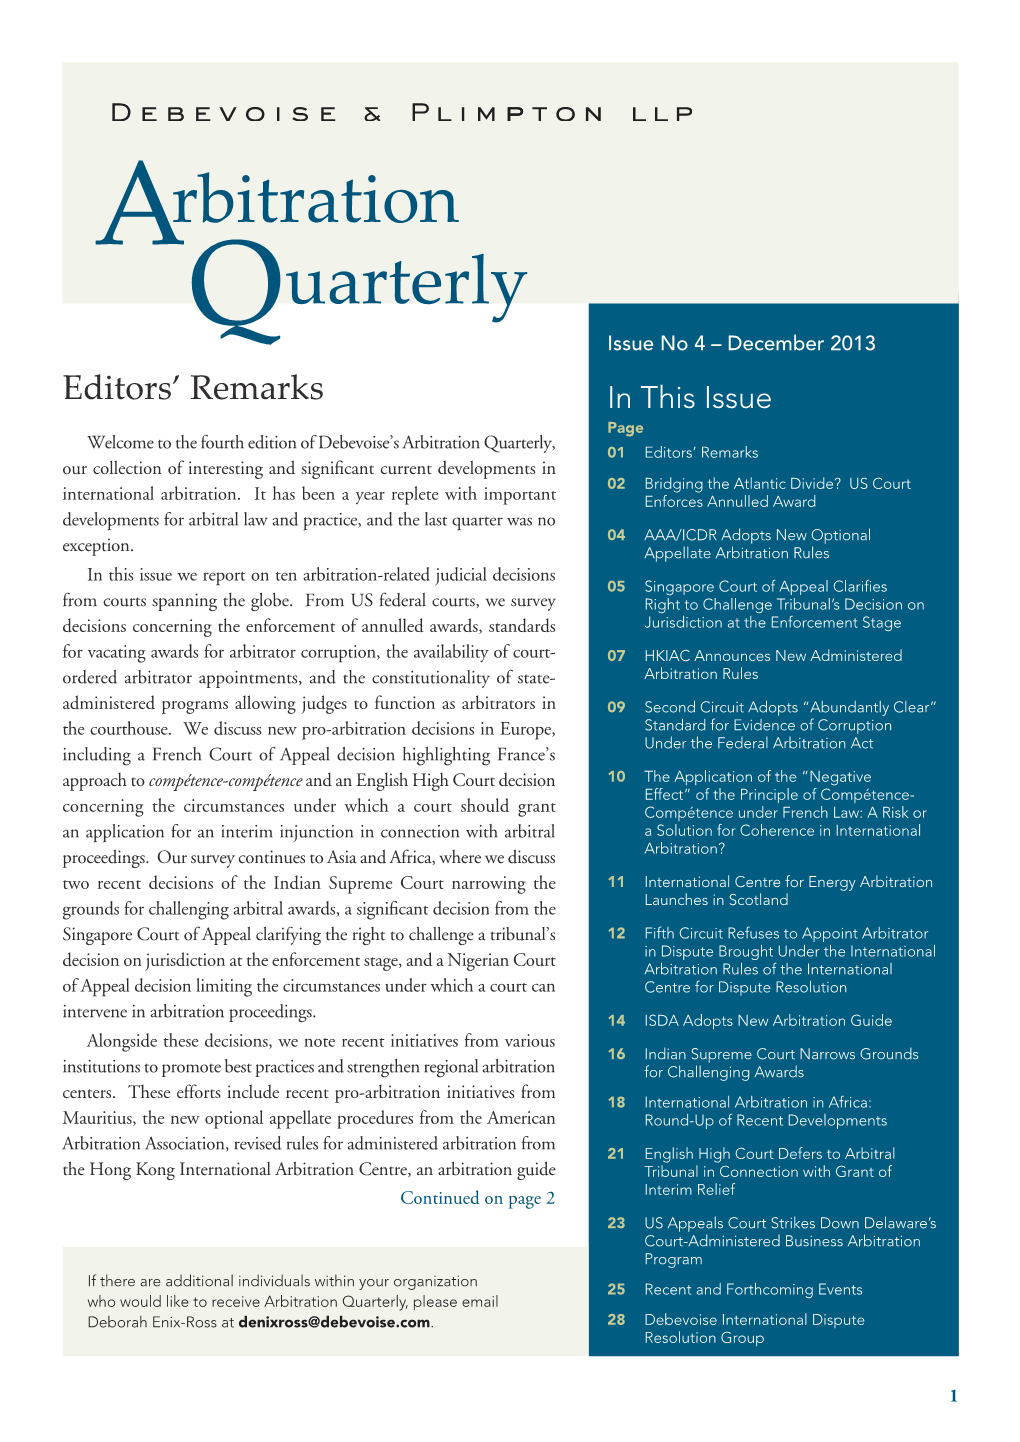 Arbitration Quarterly